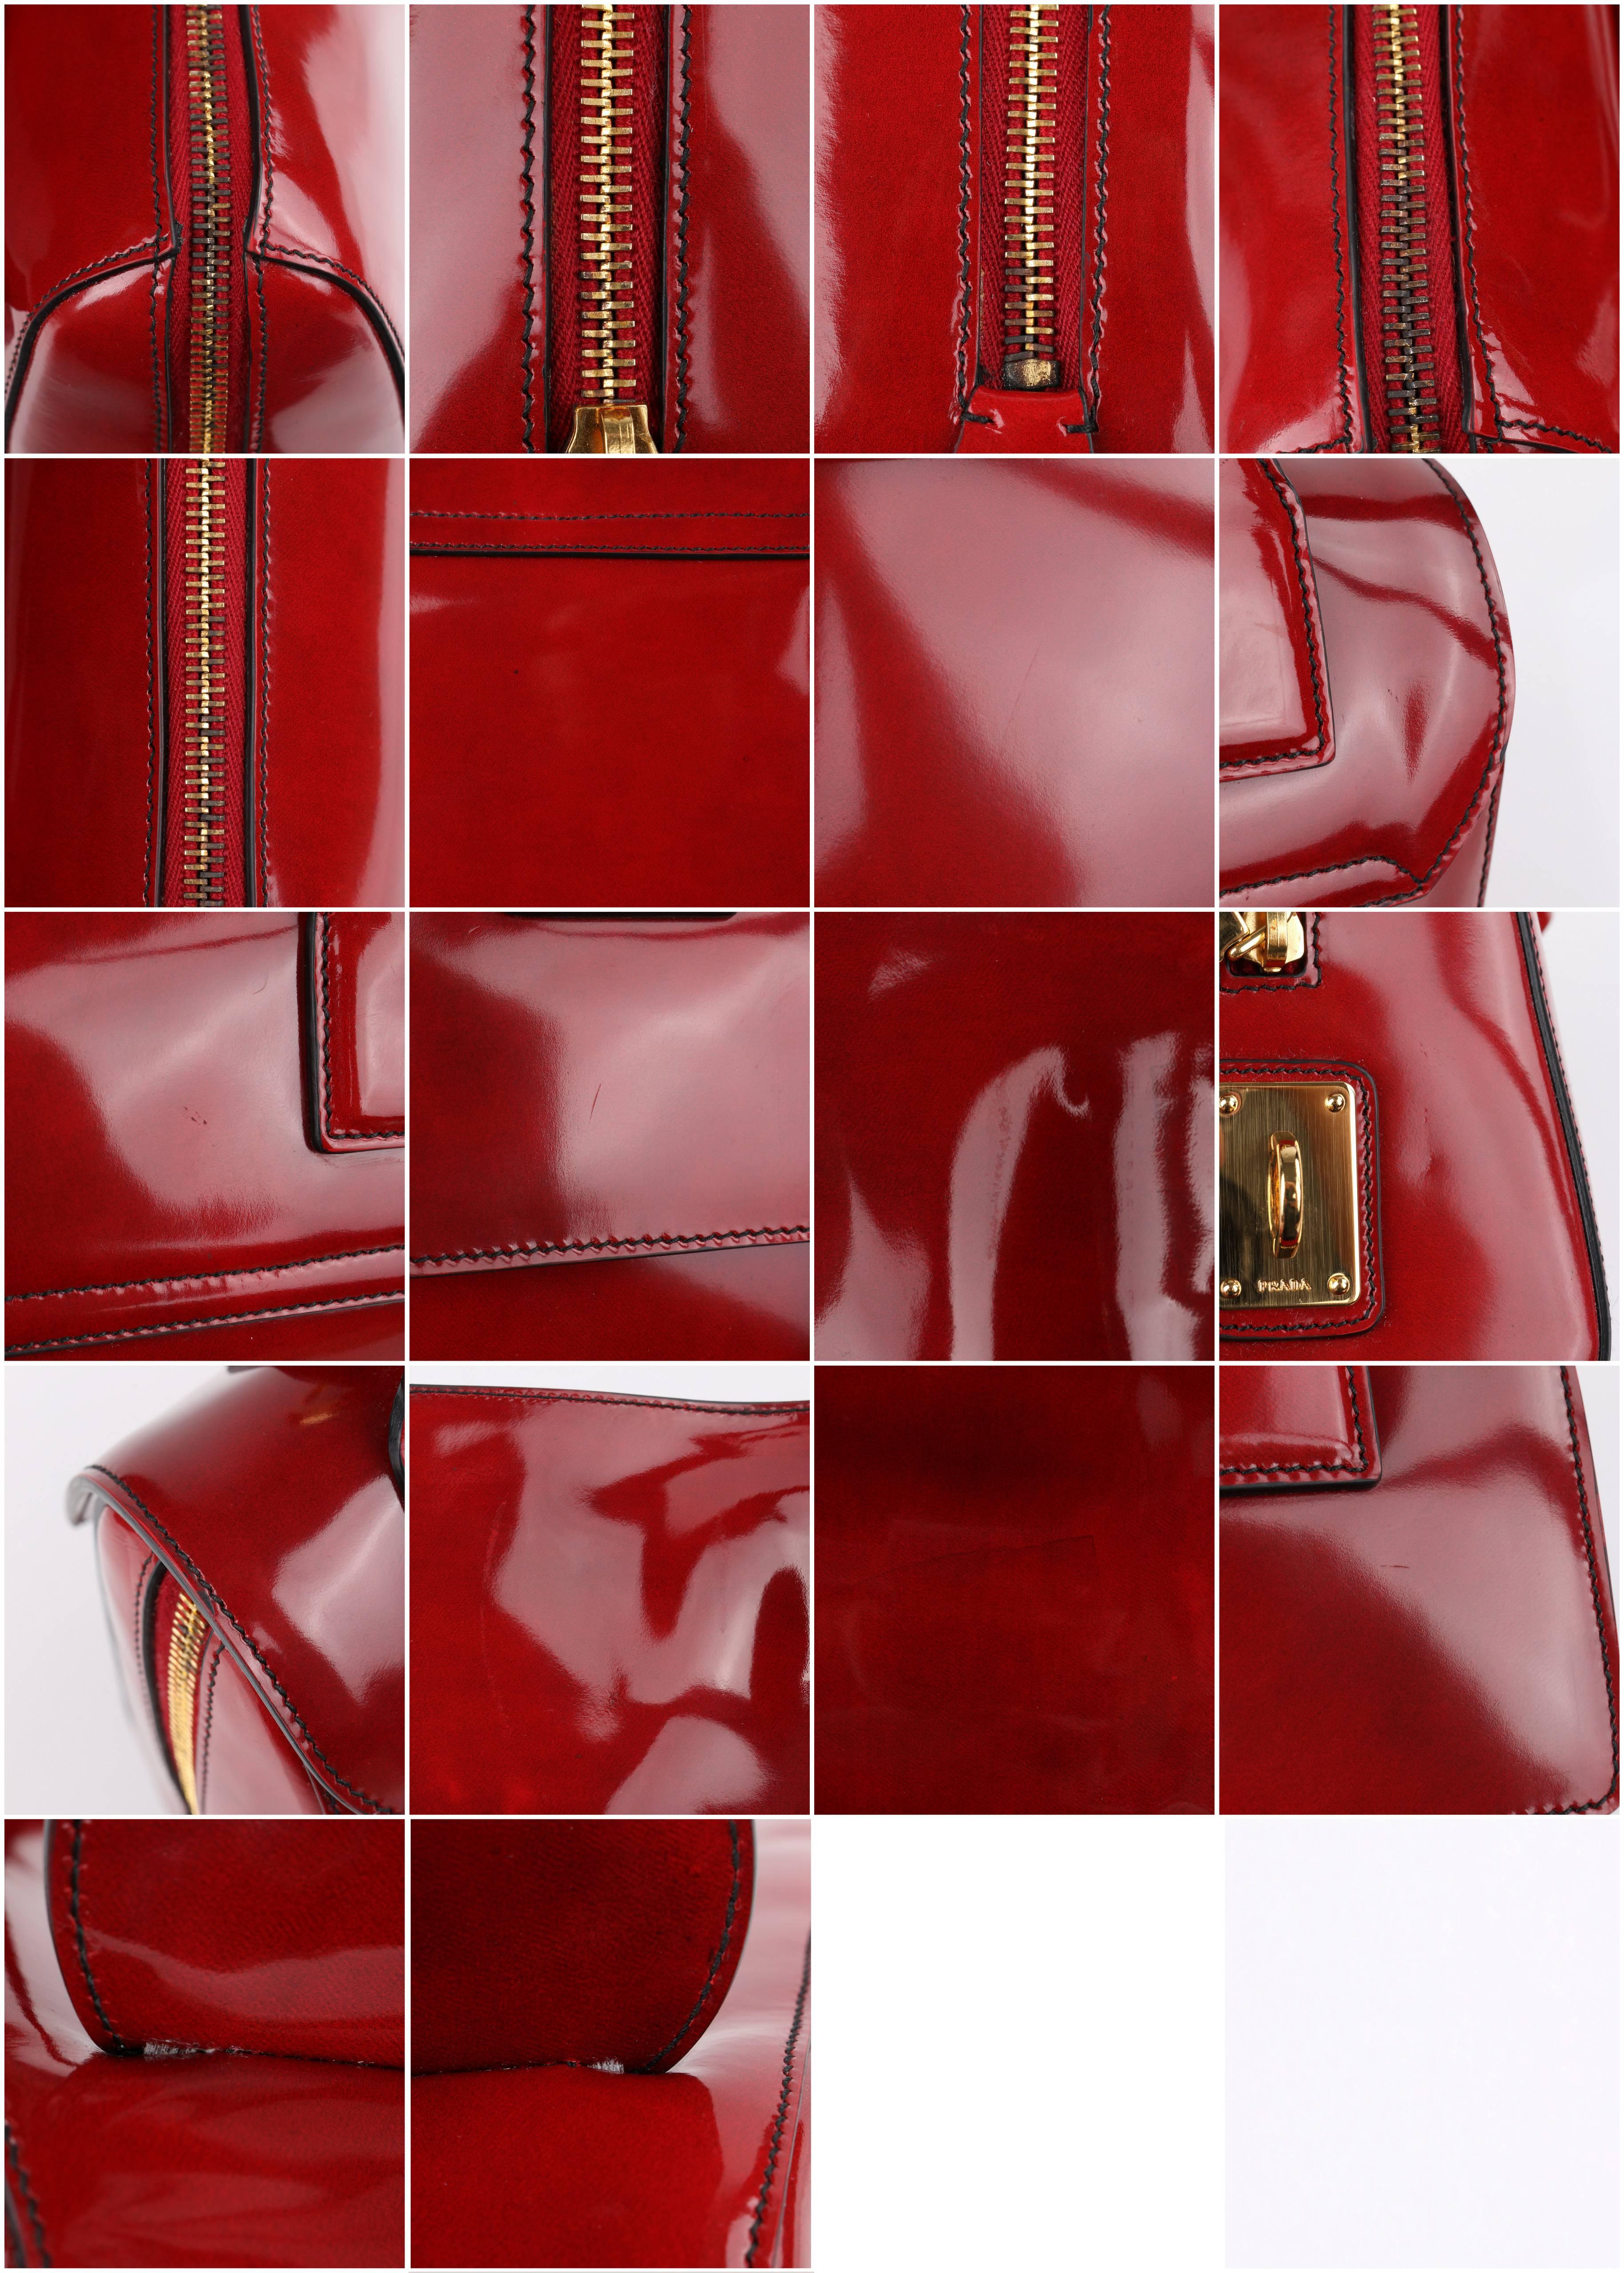 PRADA A/W 2012 Scarlet Red Spazzolato Leather Turn Lock Handbag Purse 2